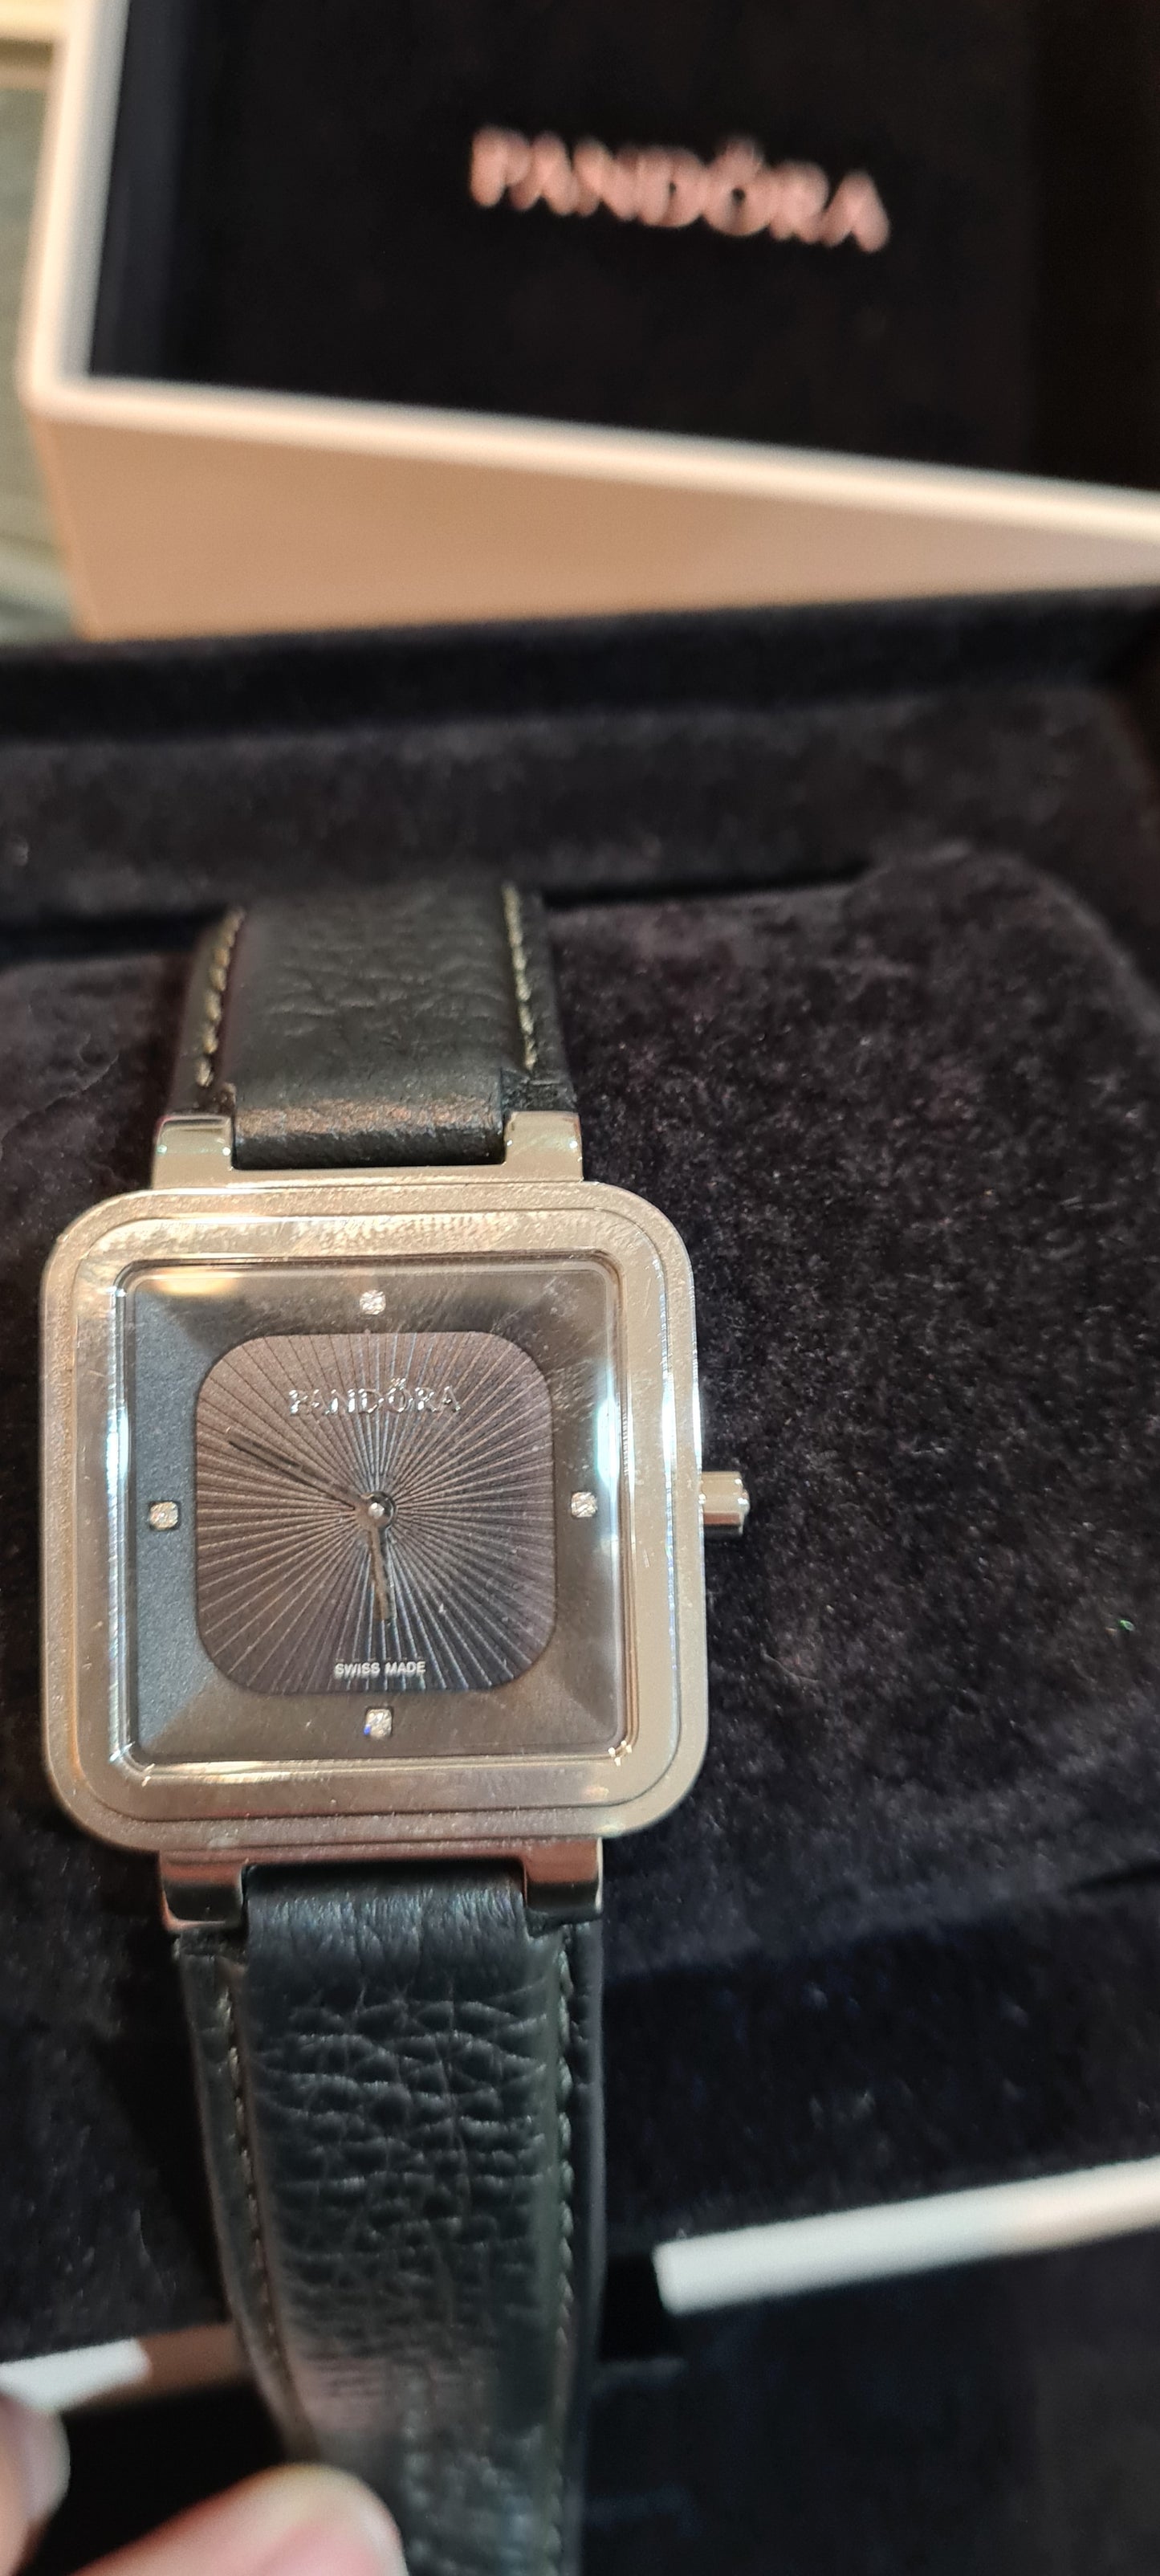 Genuine Pandora Silver Hardware Watch with Black Leather Strap